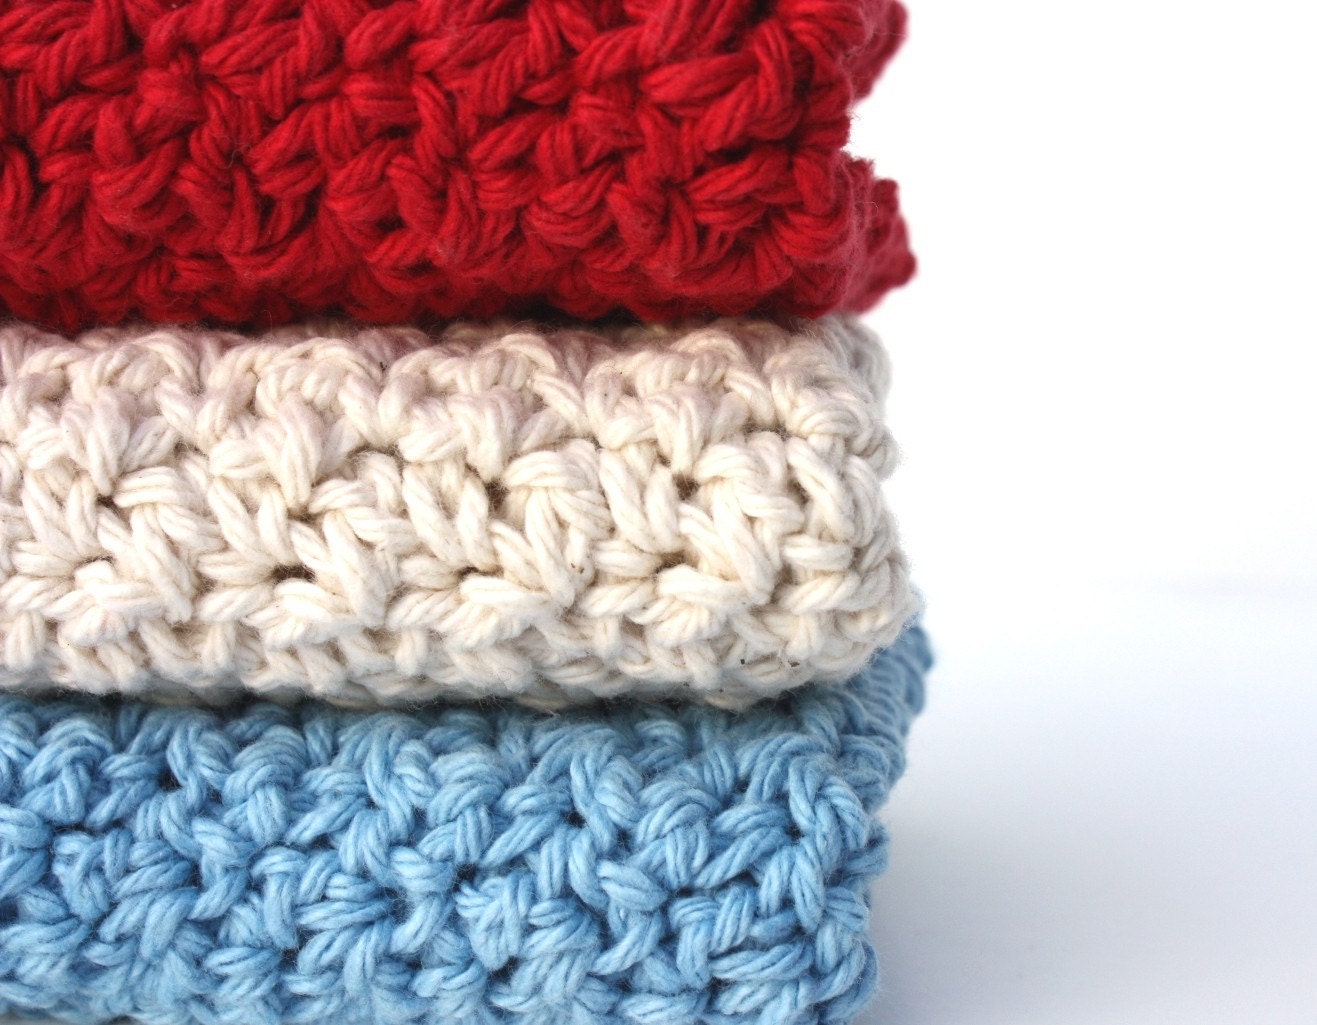 Crochet Cotton Dishcloths